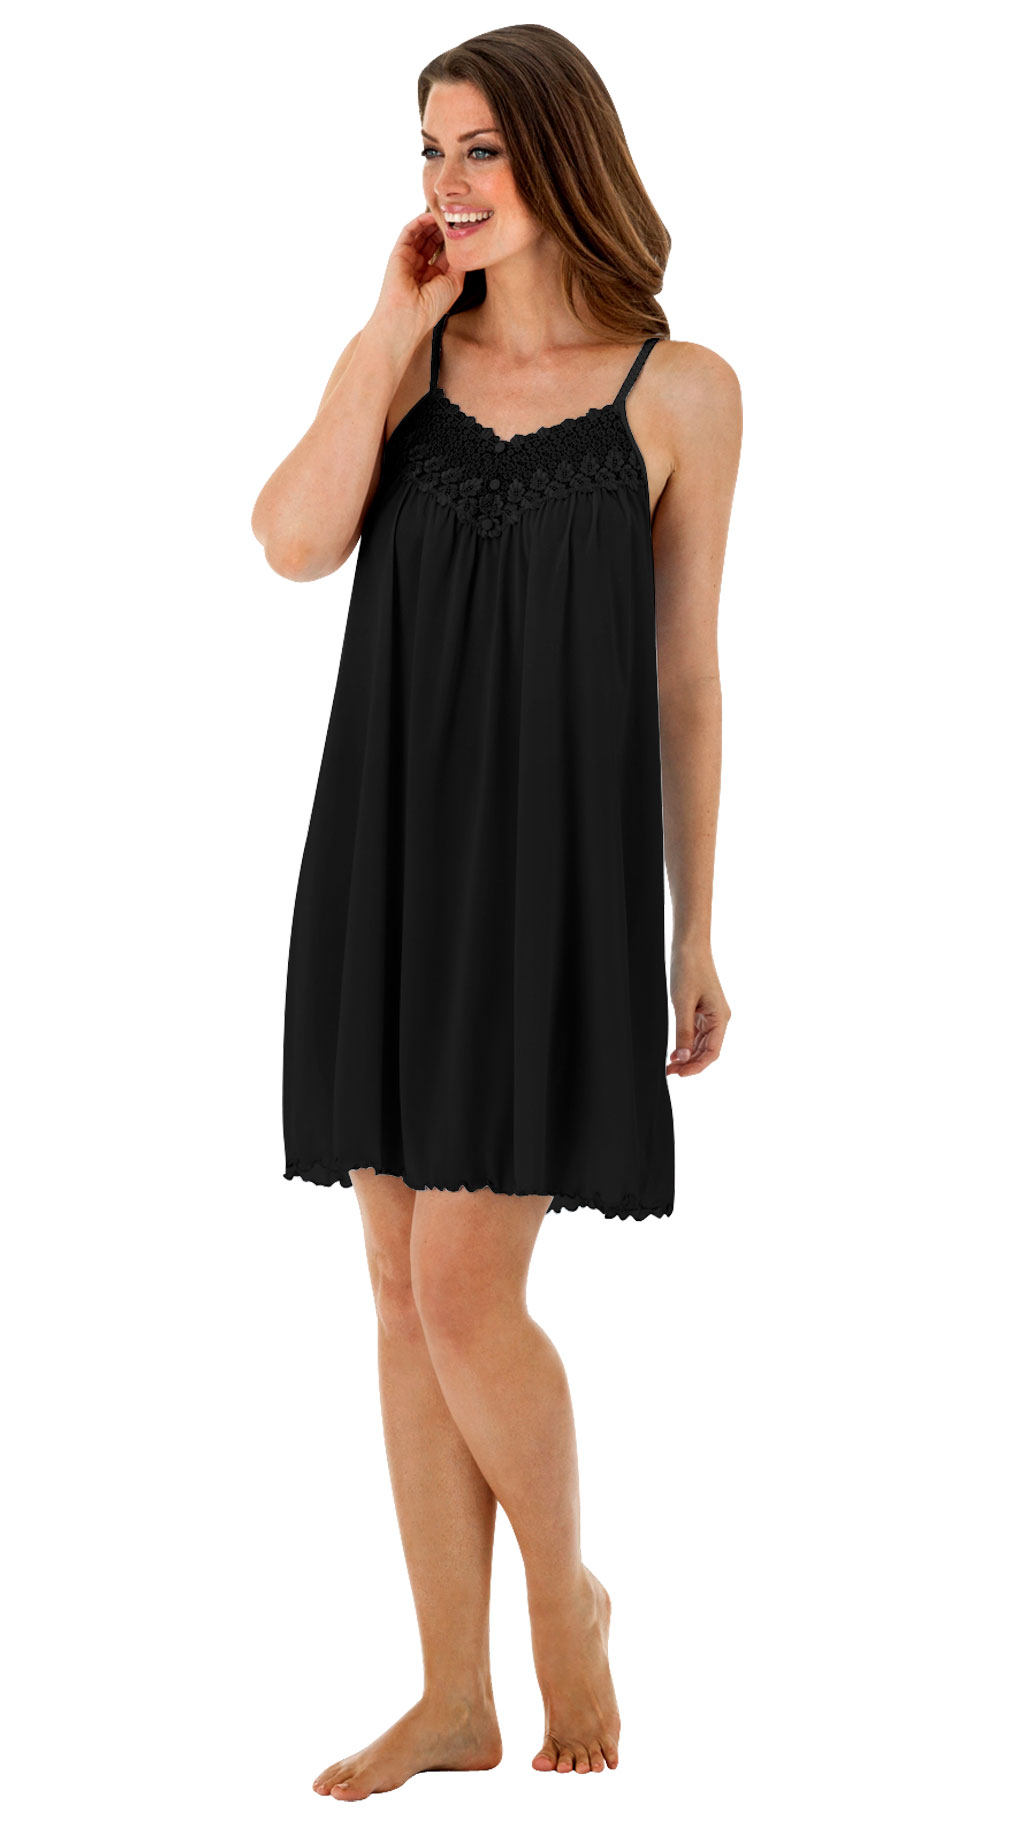 short black babydoll dress